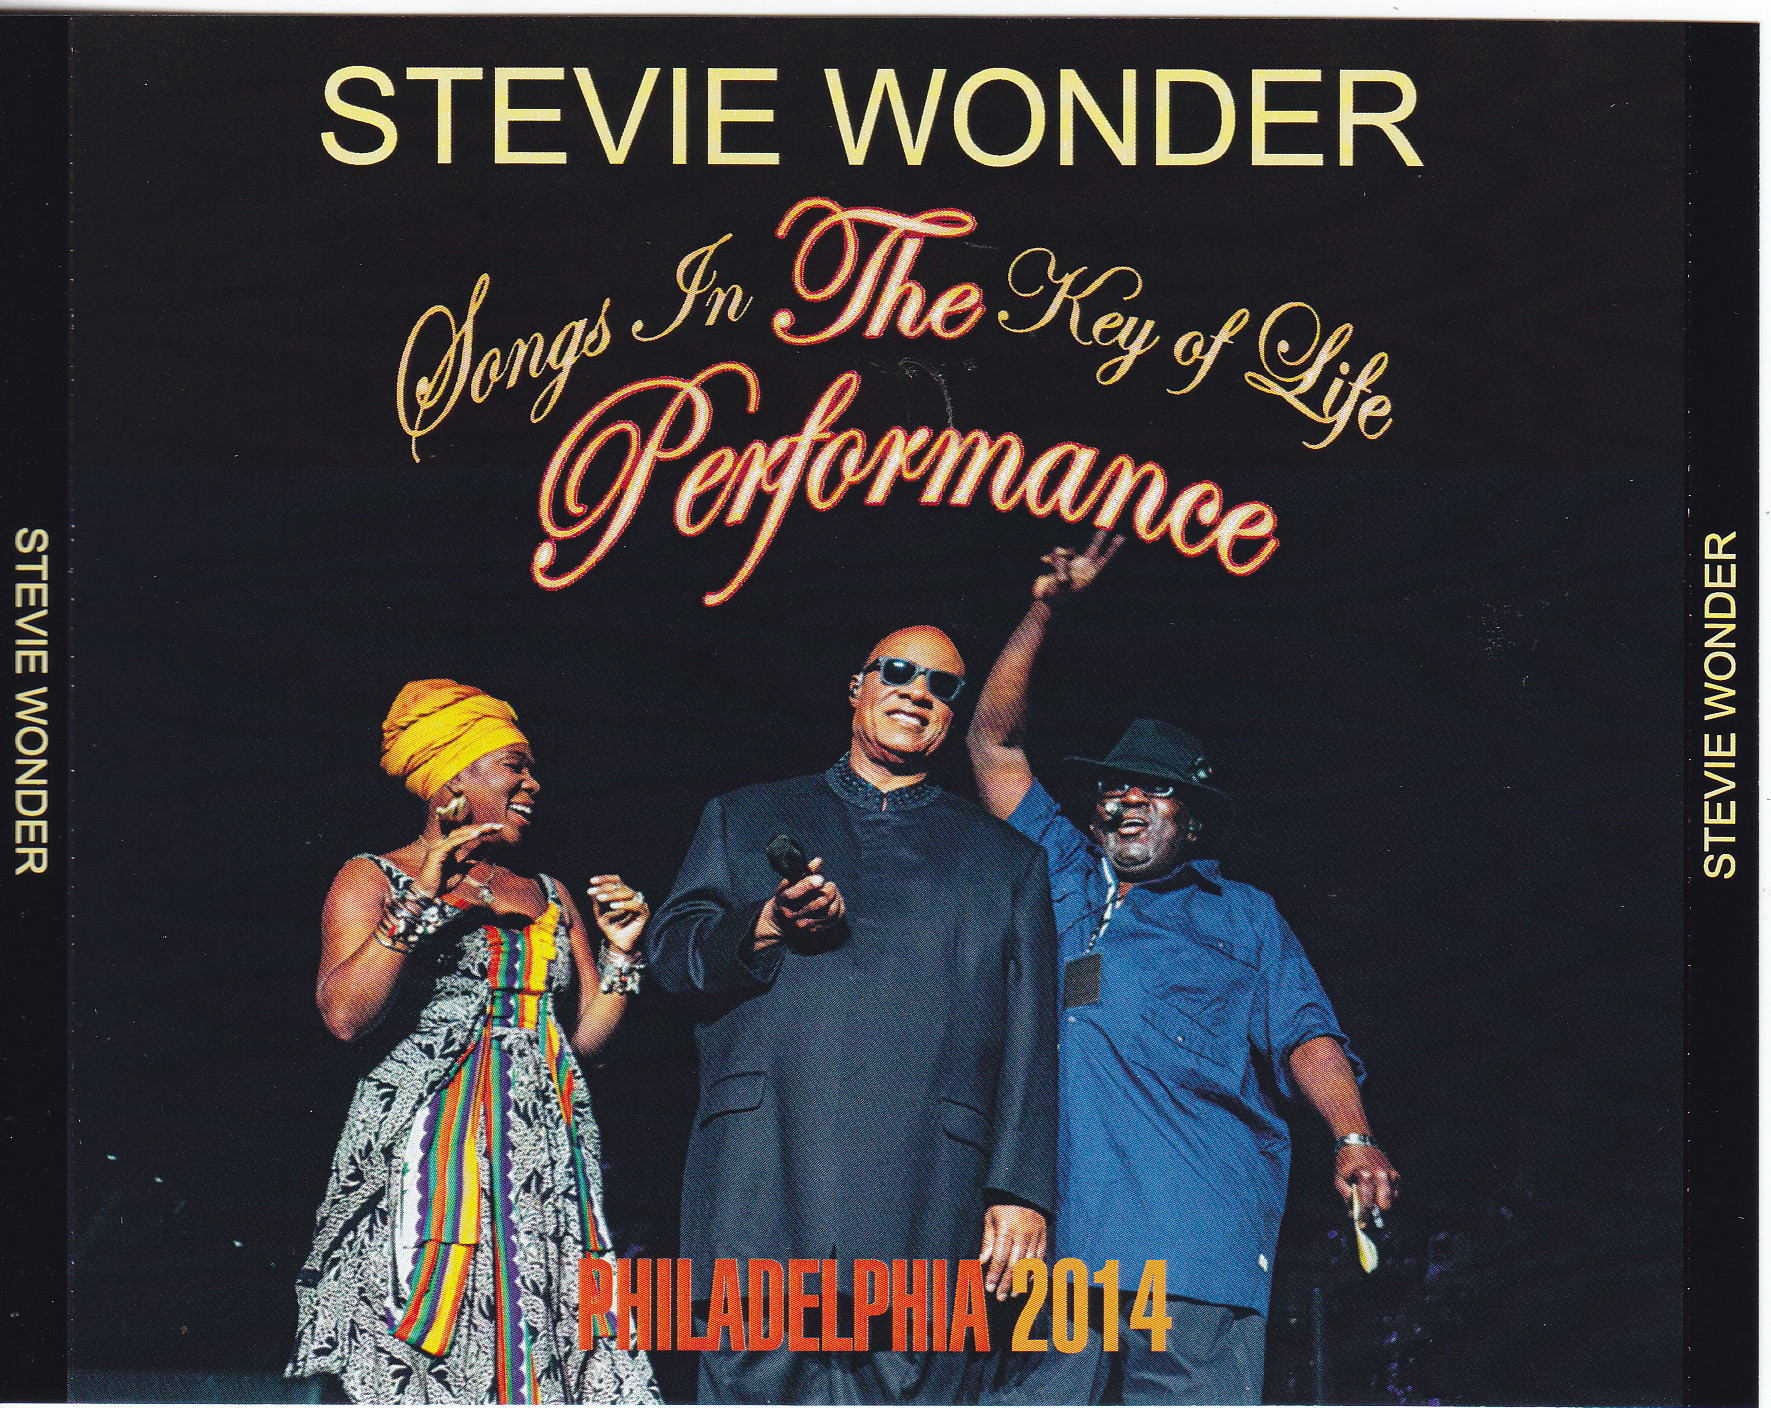 stevie wonder songs in the key of life performance